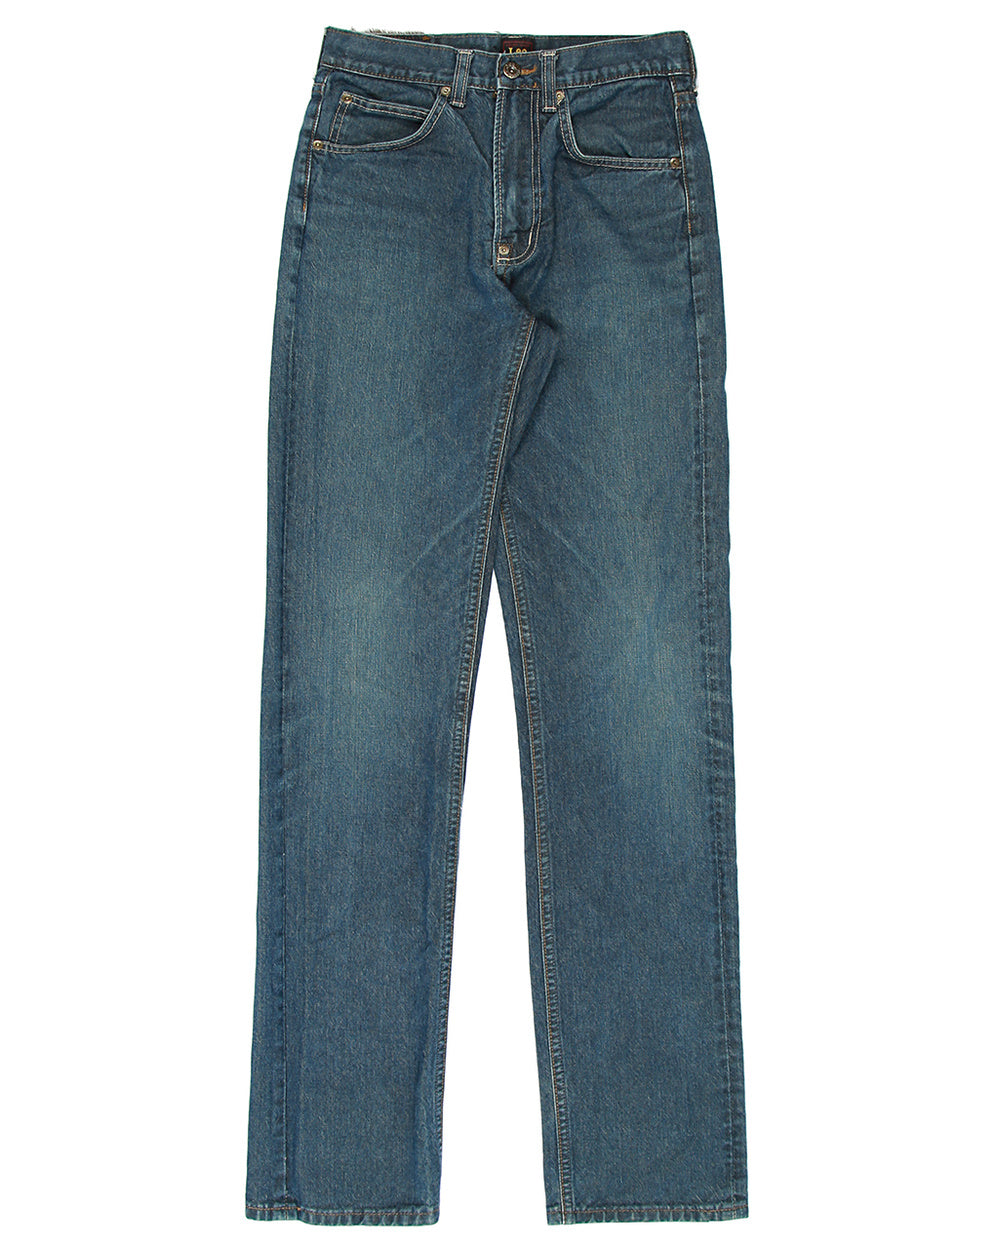 Lee Blue High Waisted Jeans - W27